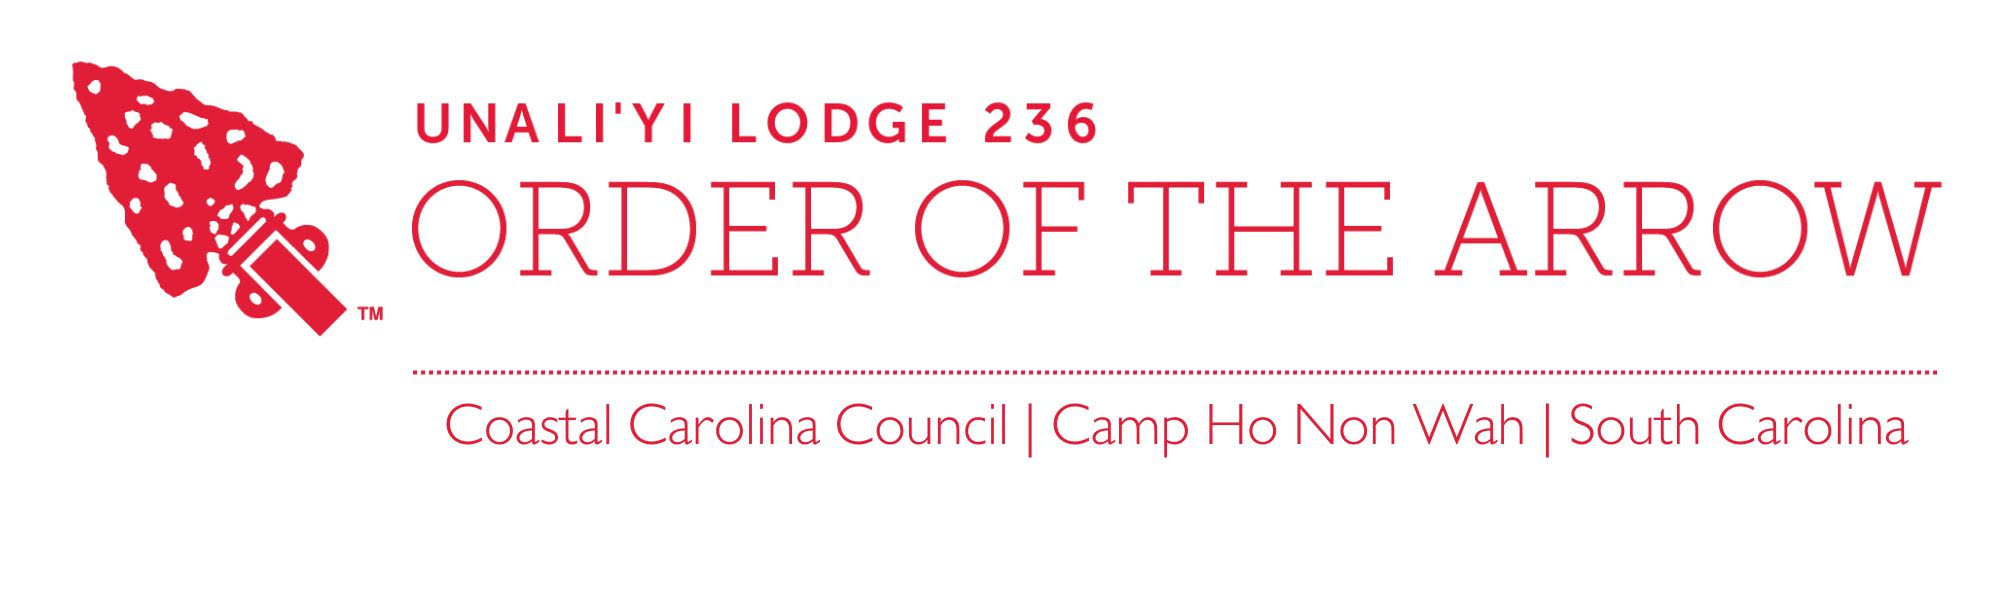 Unali'Yi Lodge 236-Order of the Arrow-Coastal Carolina Council BSA